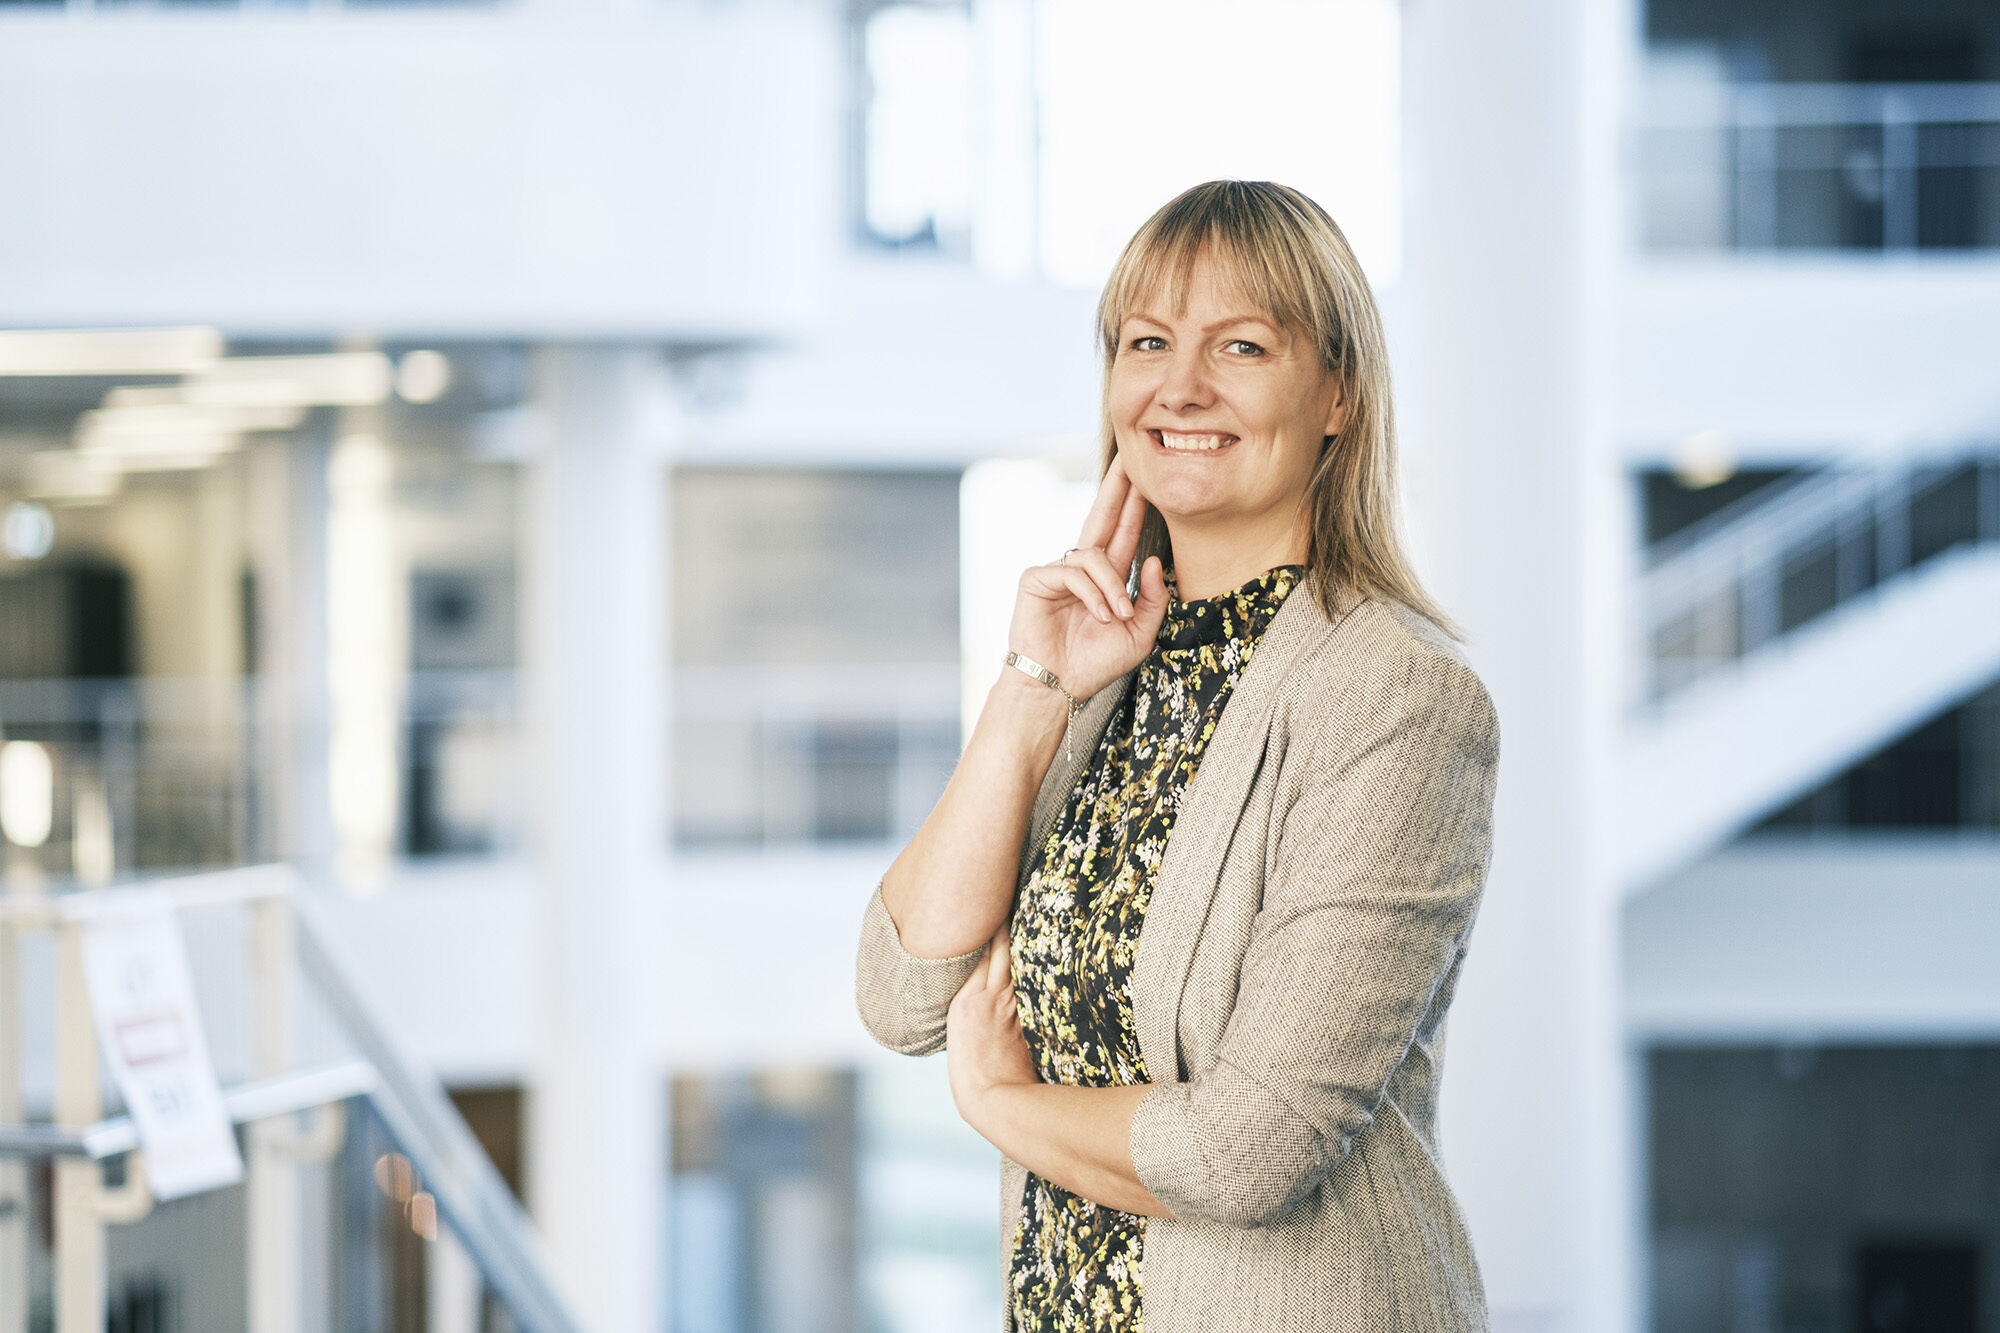 Dr. Erna Sif Arnardóttir is the Director of the Reykjavik University Sleep Institute, chairman of the Icelandic Sleep Research Society and a director of the board of the European Sleep Research Society